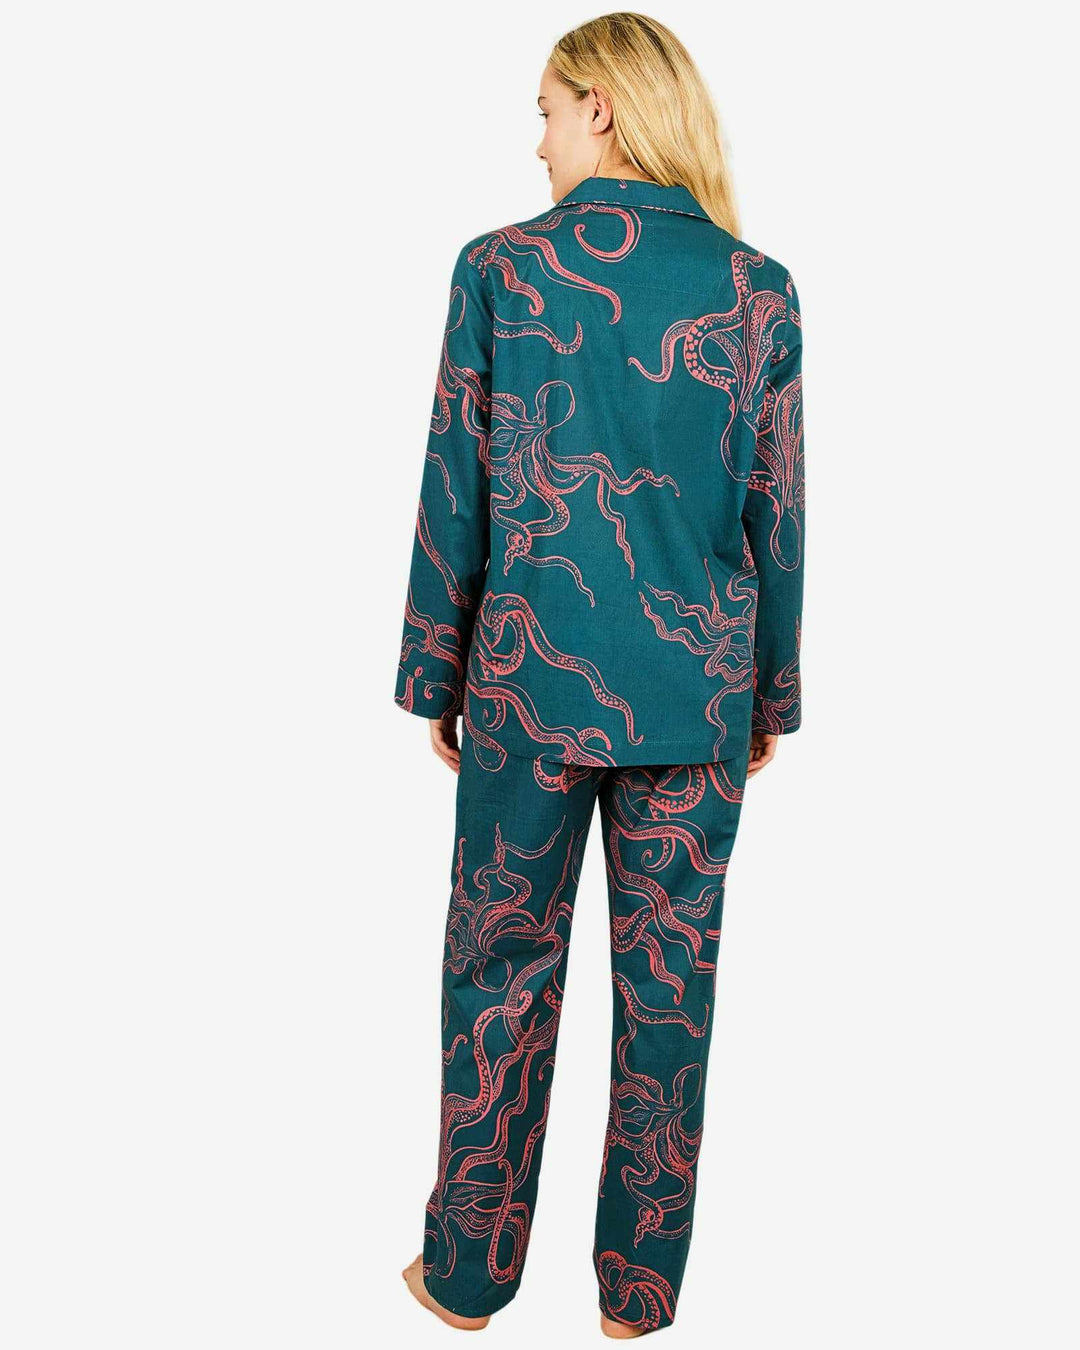 Womens cotton pyjamas set - Pink octopuses on turquoise